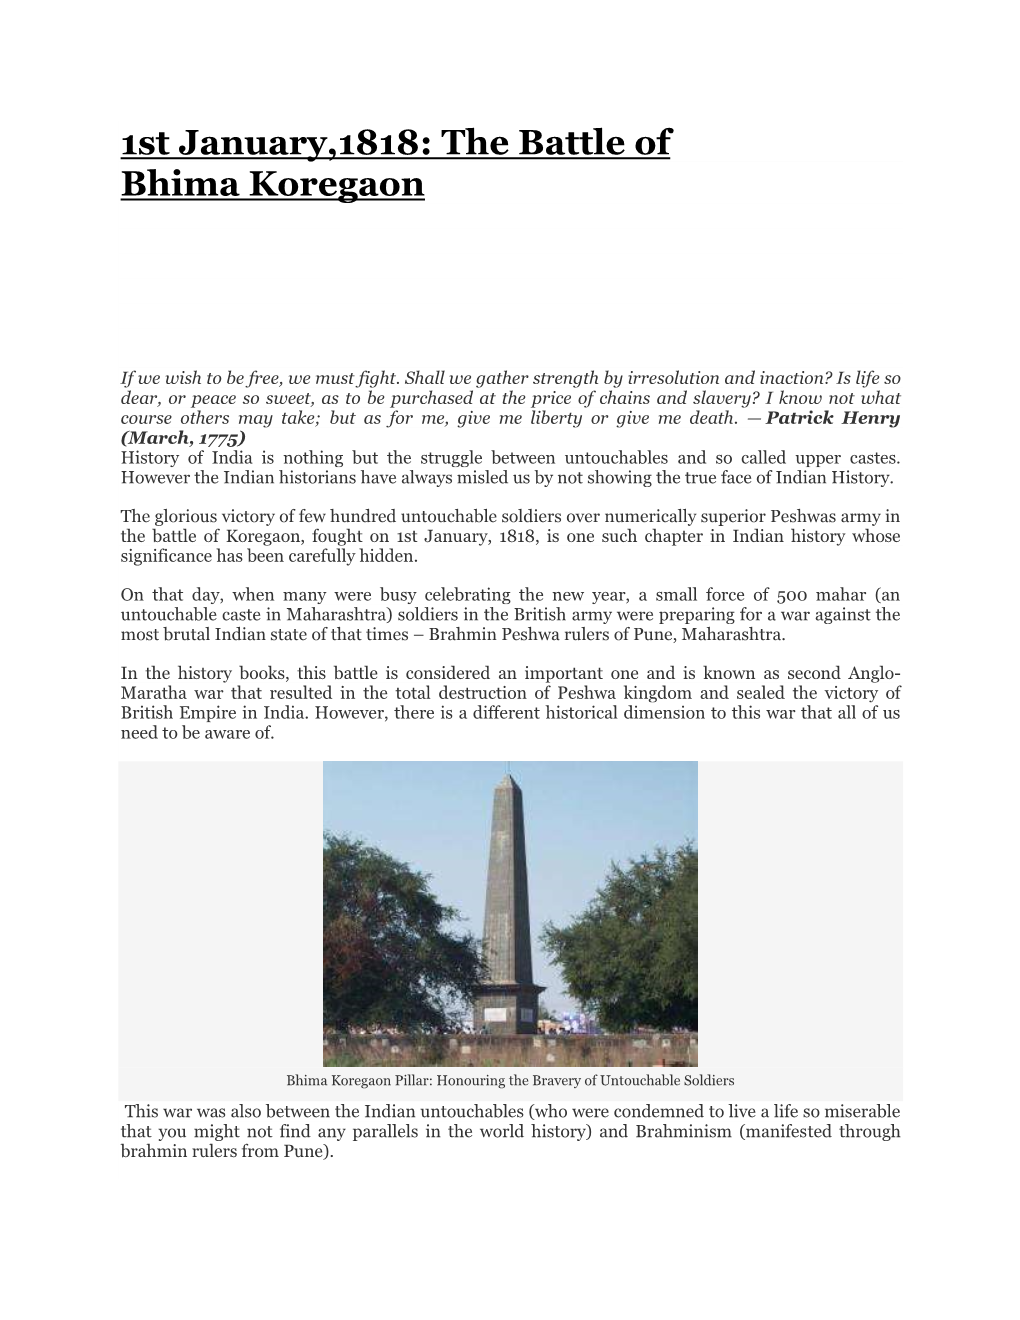 1St January,1818: the Battle of Bhima Koregaon